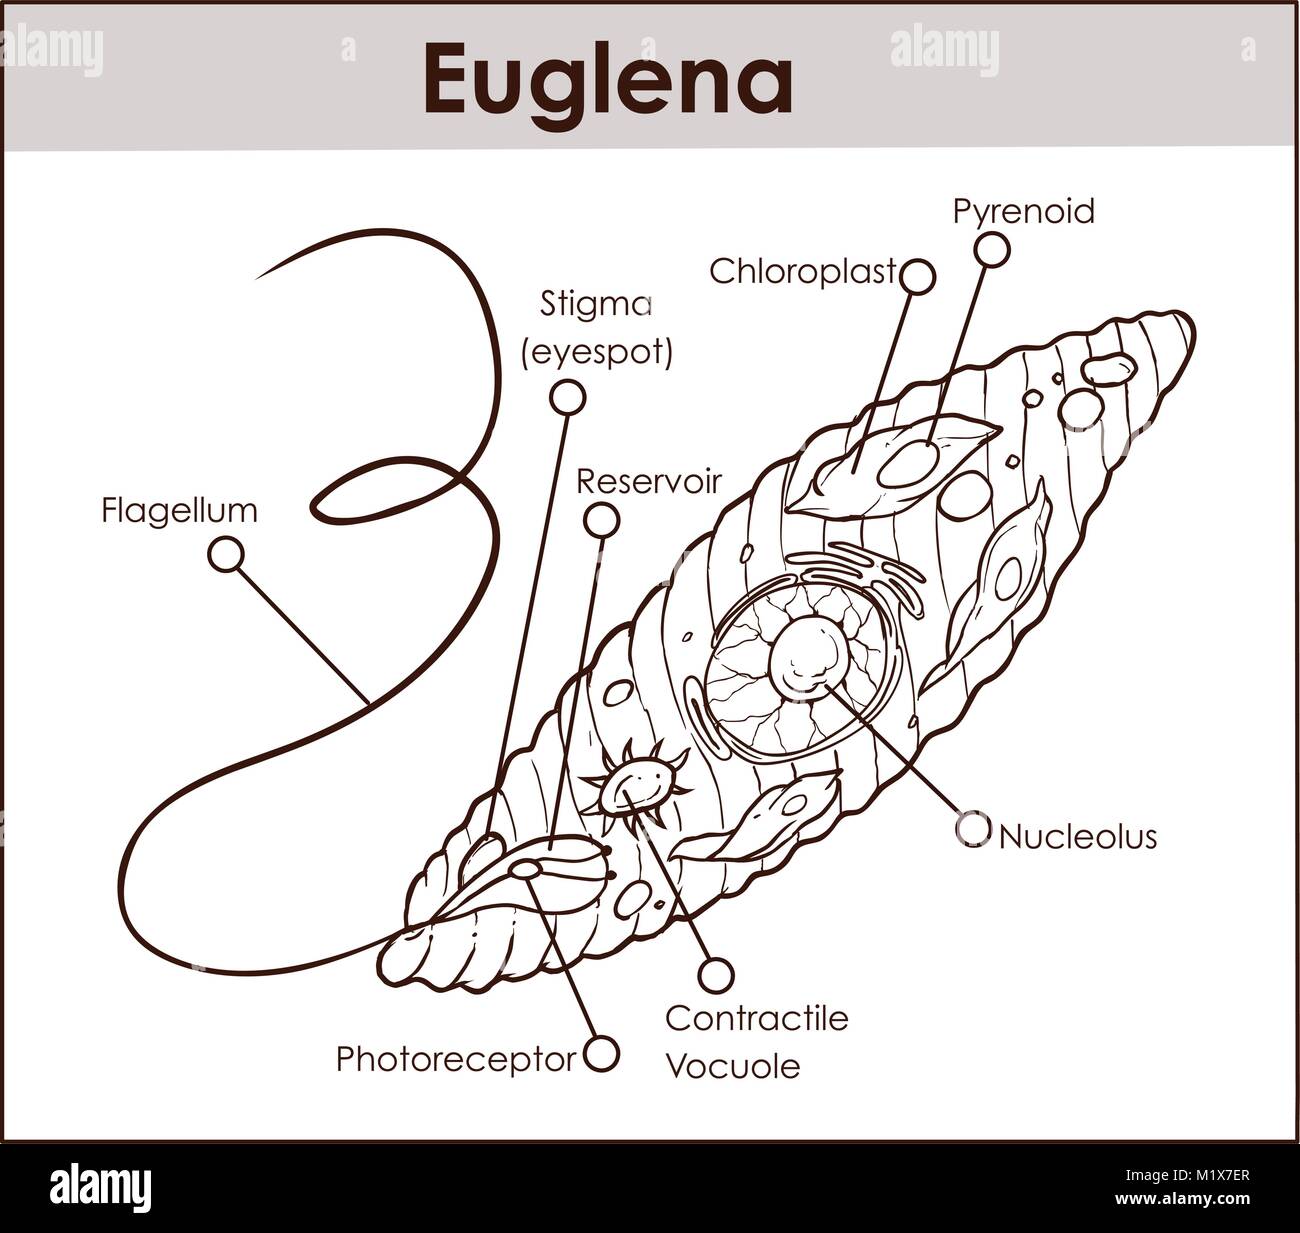 Vektor Euglena Querschnittsdiagramm Vertreter Protisten euglenoid Pflanze wie Tier wie mikroskopische Wesen mit allen Zelle teile Kern fla und Stock Vektor